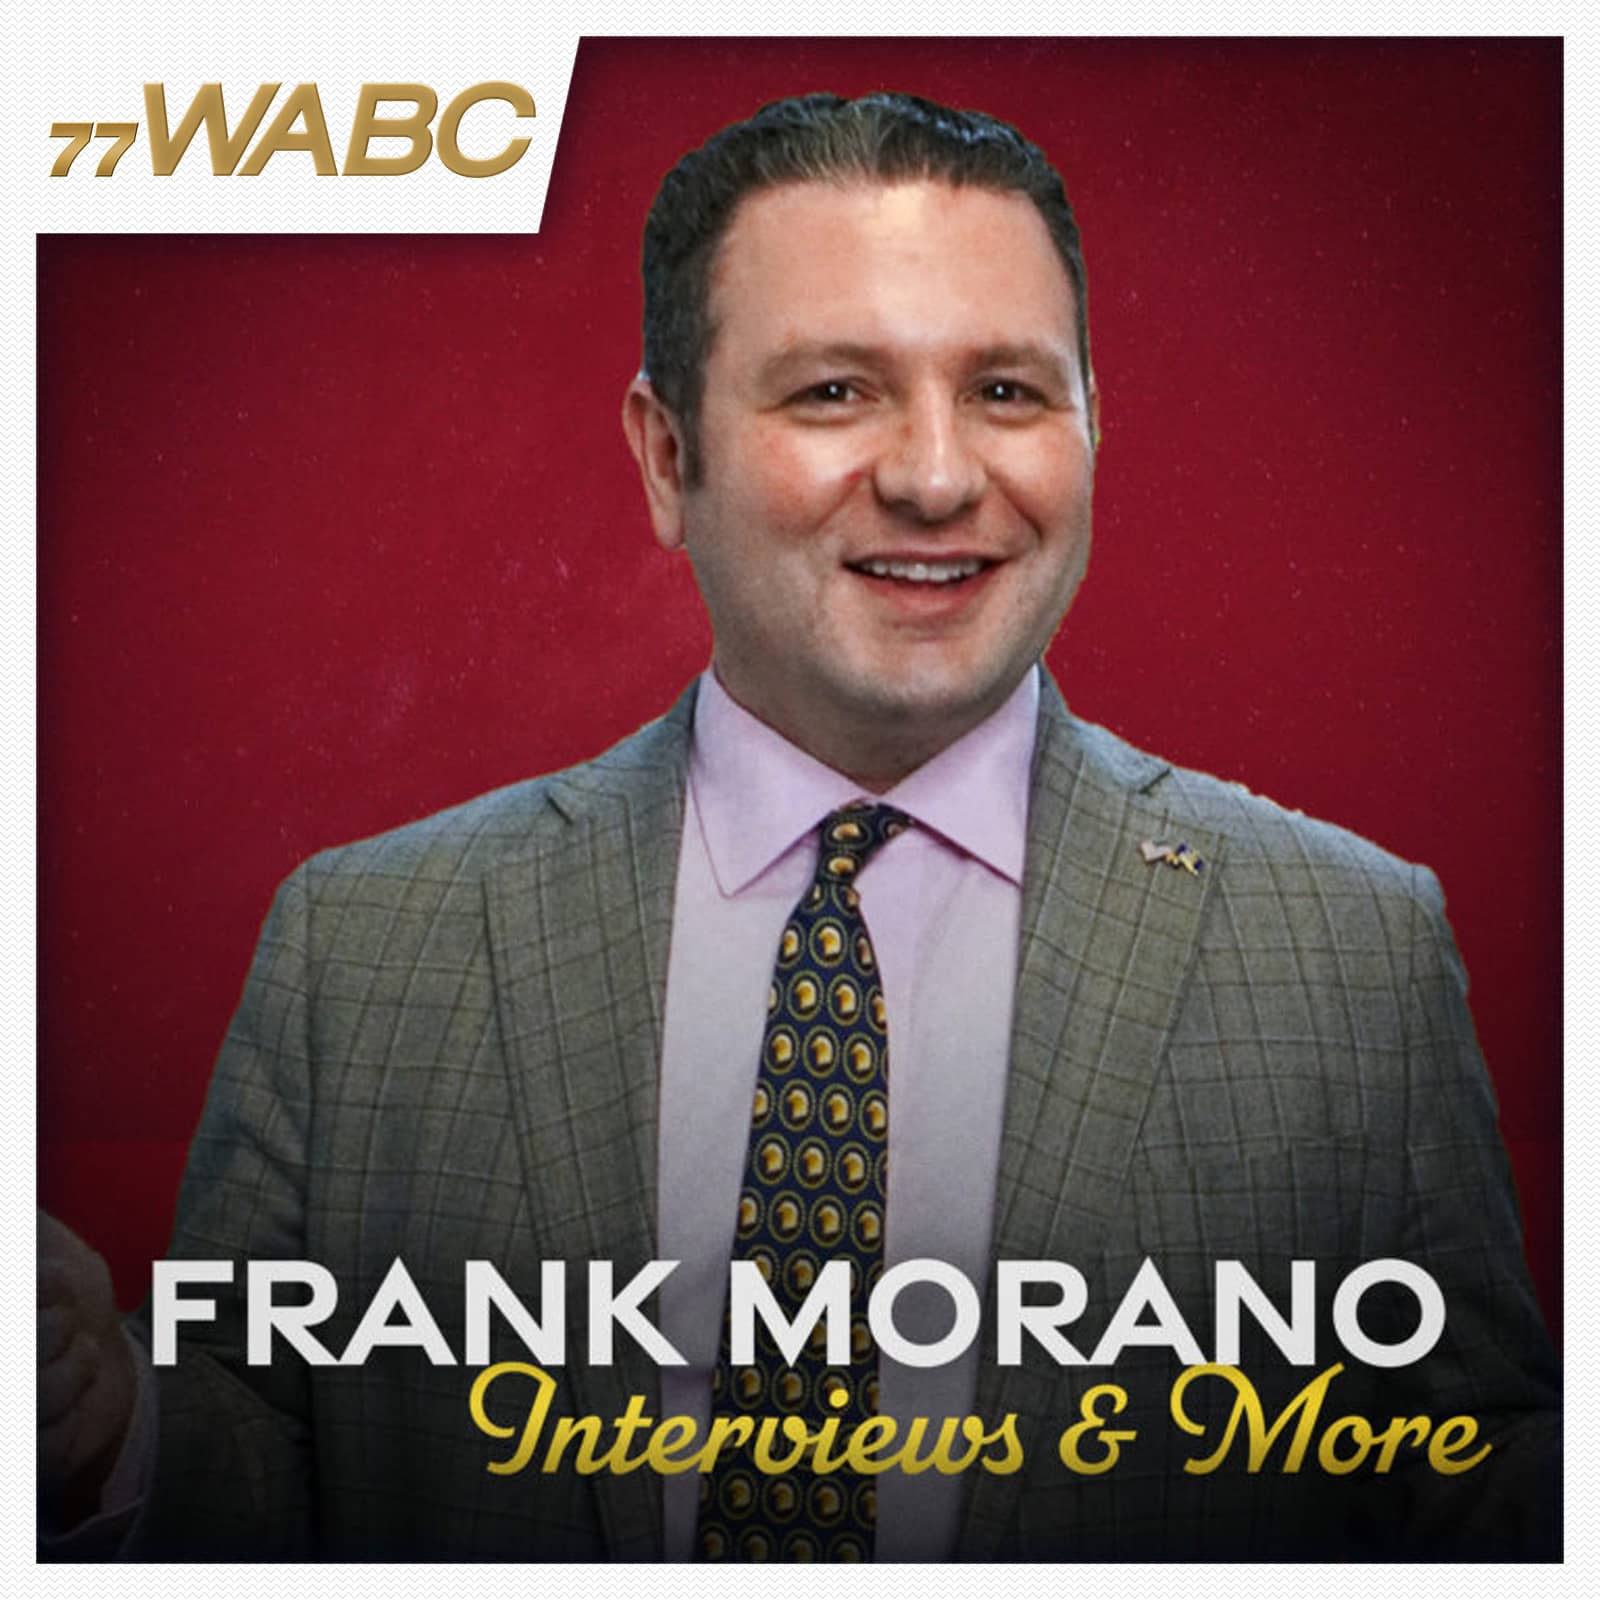 frank-morano-interviews-and-more-podcast-new-logo-182